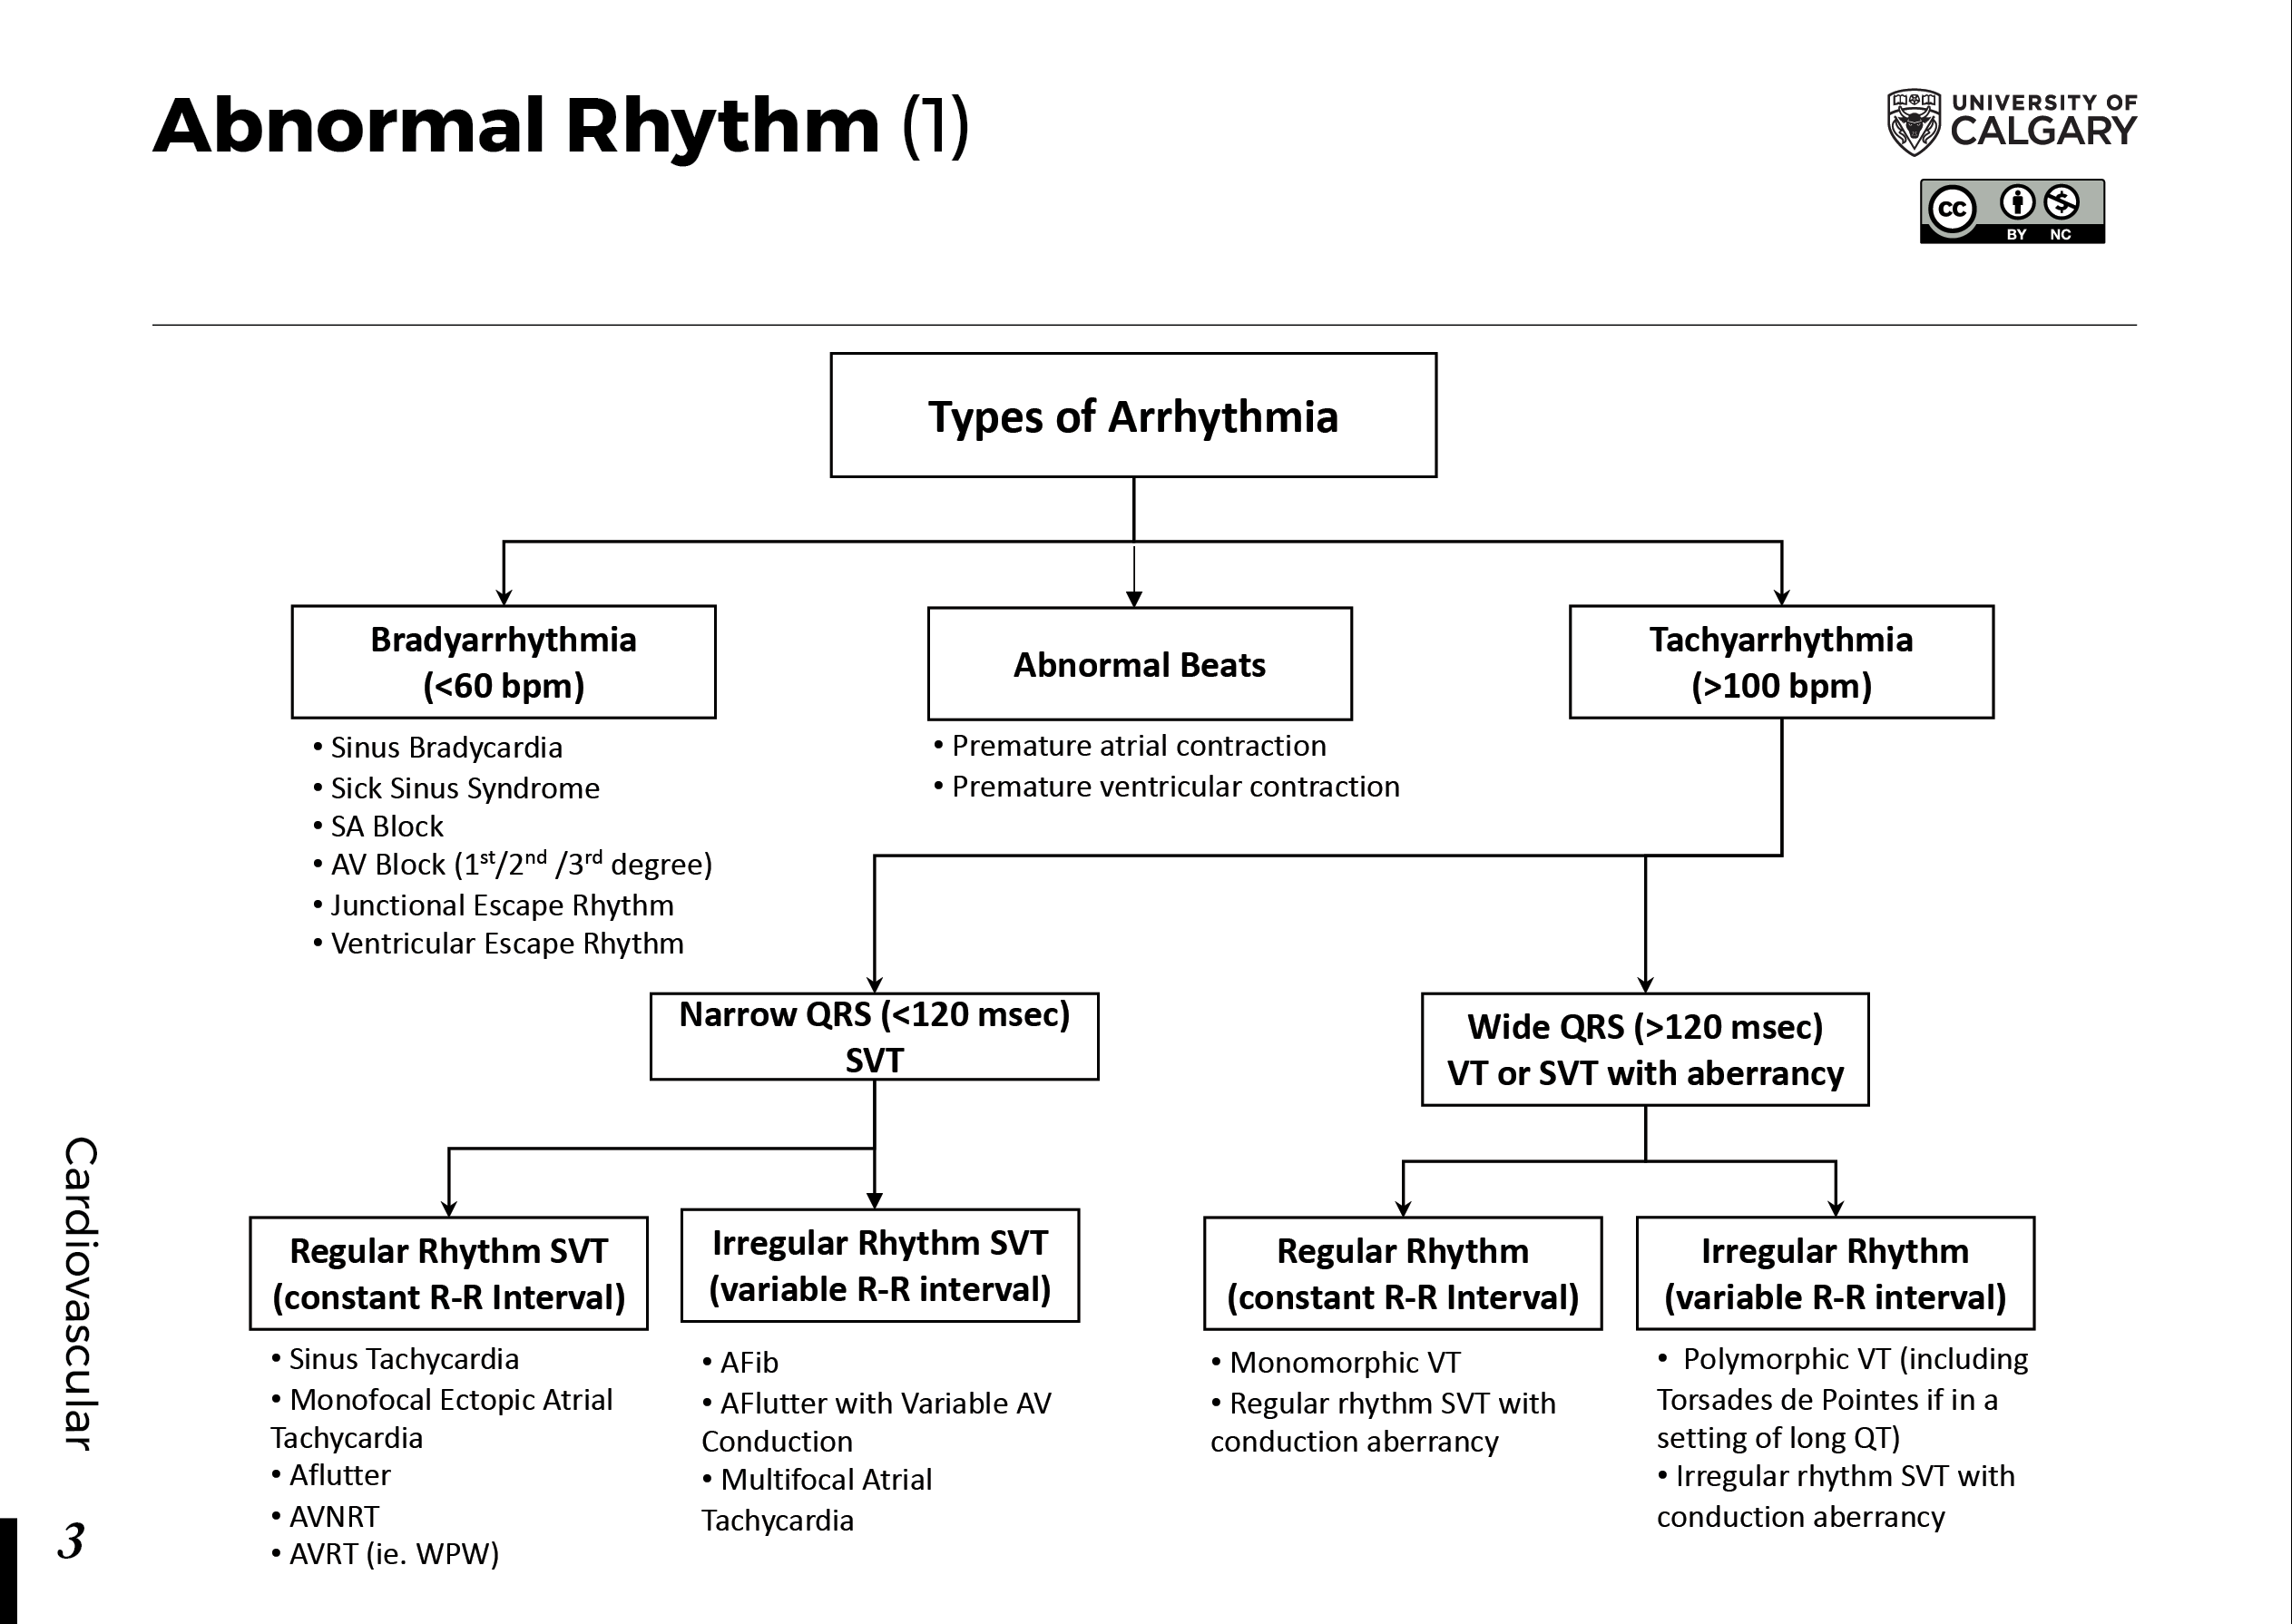 ABNORMAL RHYTHM (1) Scheme